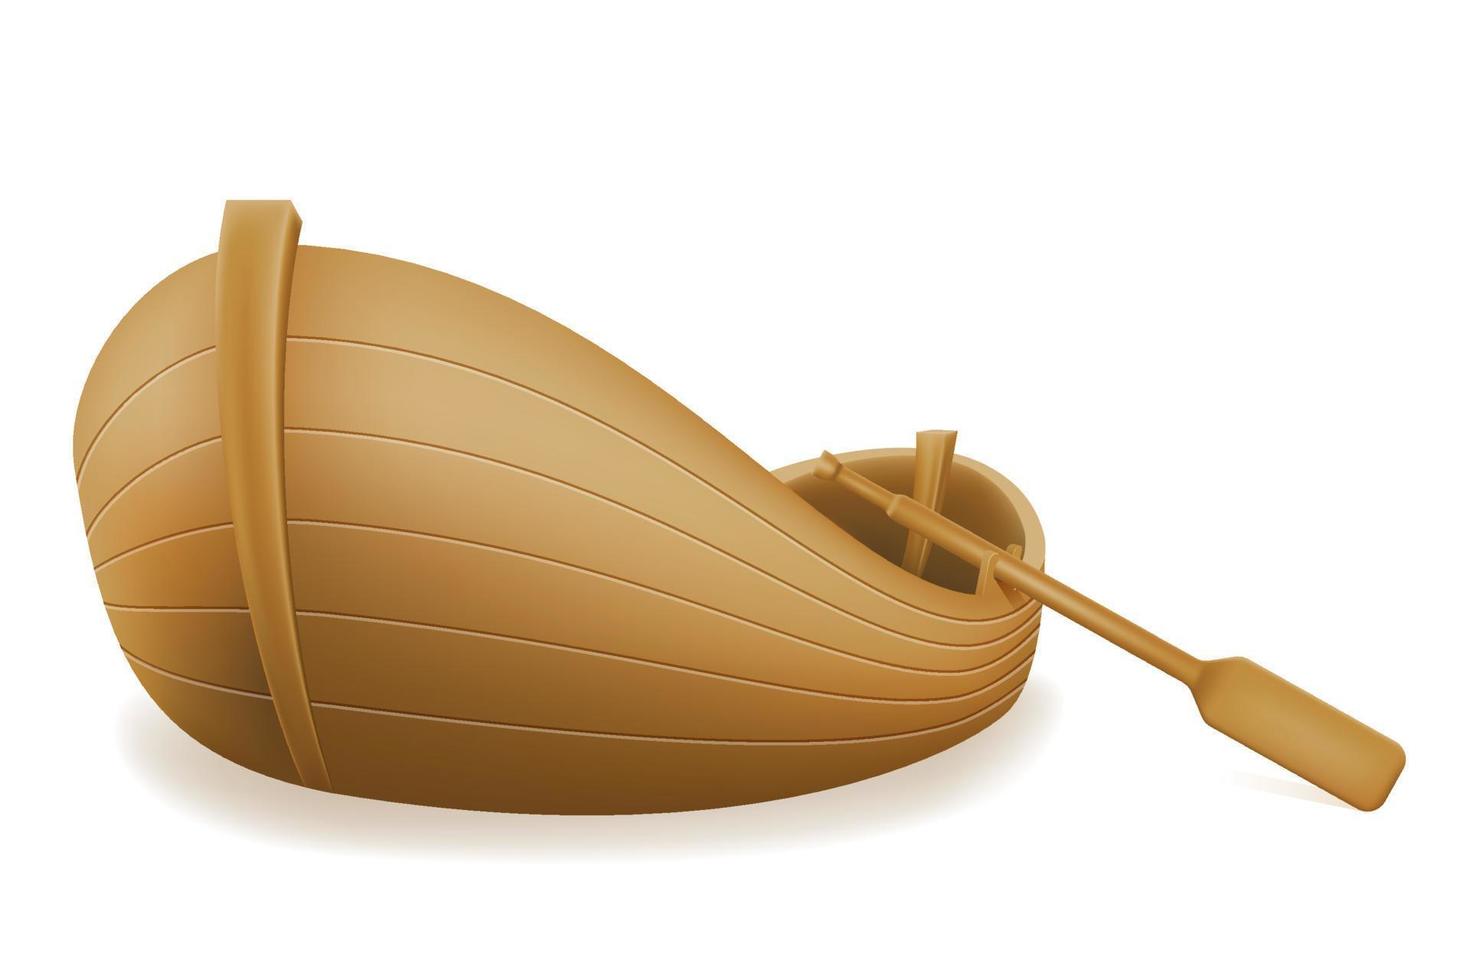 antiguo de madera pescar barco para aficionado pescar vector ilustración aislado en blanco antecedentes